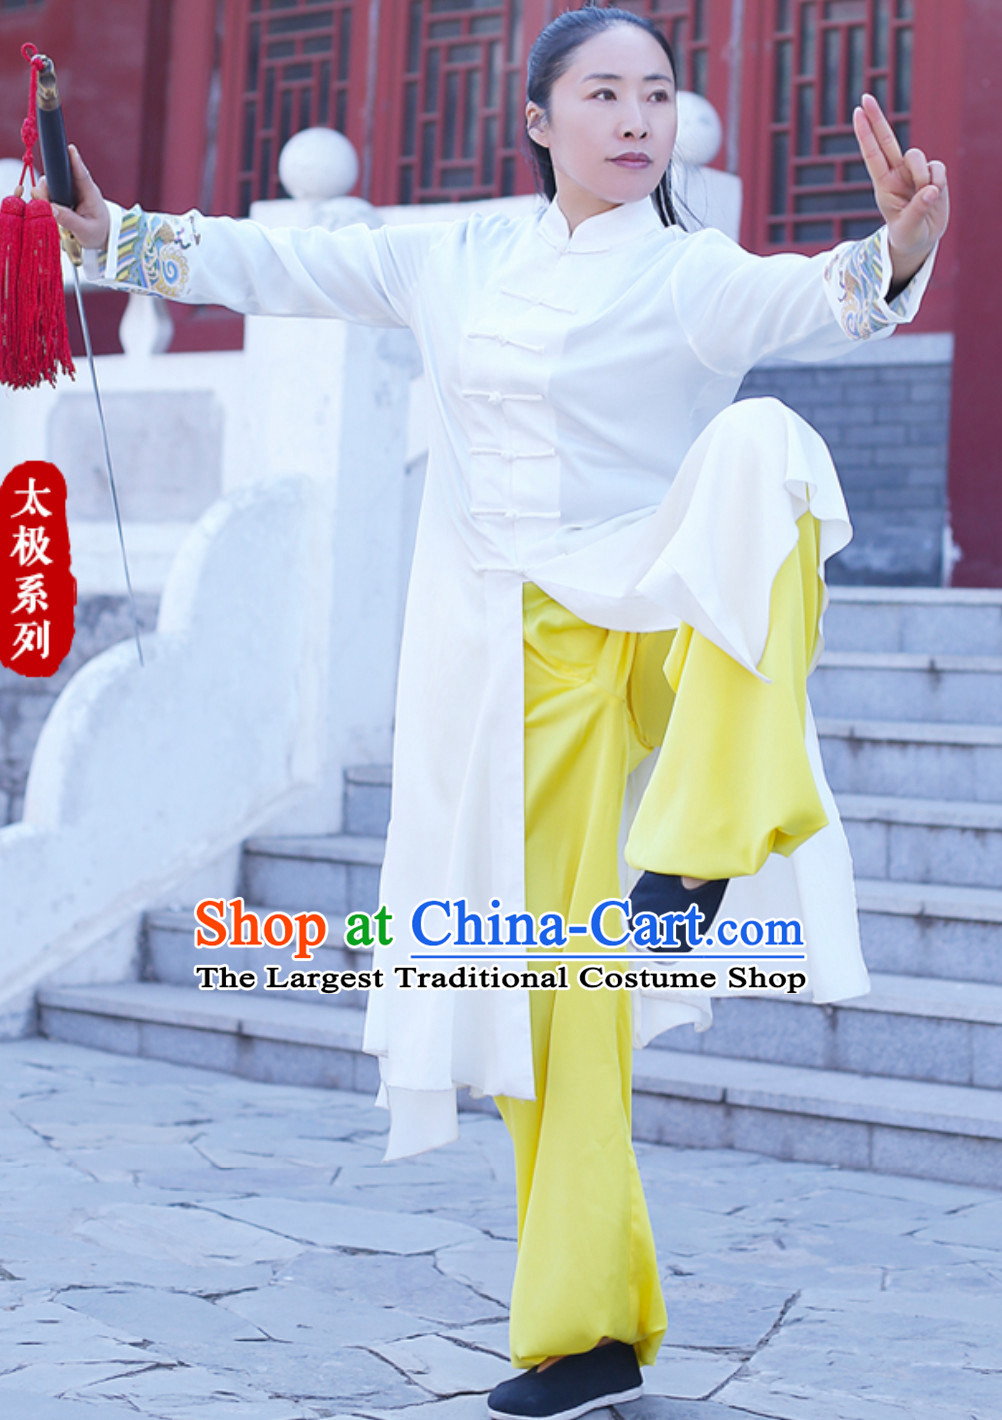 Top Chinese Traditional Competition Championship Tai Chi Teacher Taiji Kung Fu Wing Chun Kungfu Tai Ji Sword Gong Fu Master Suits Clothes Complete Set